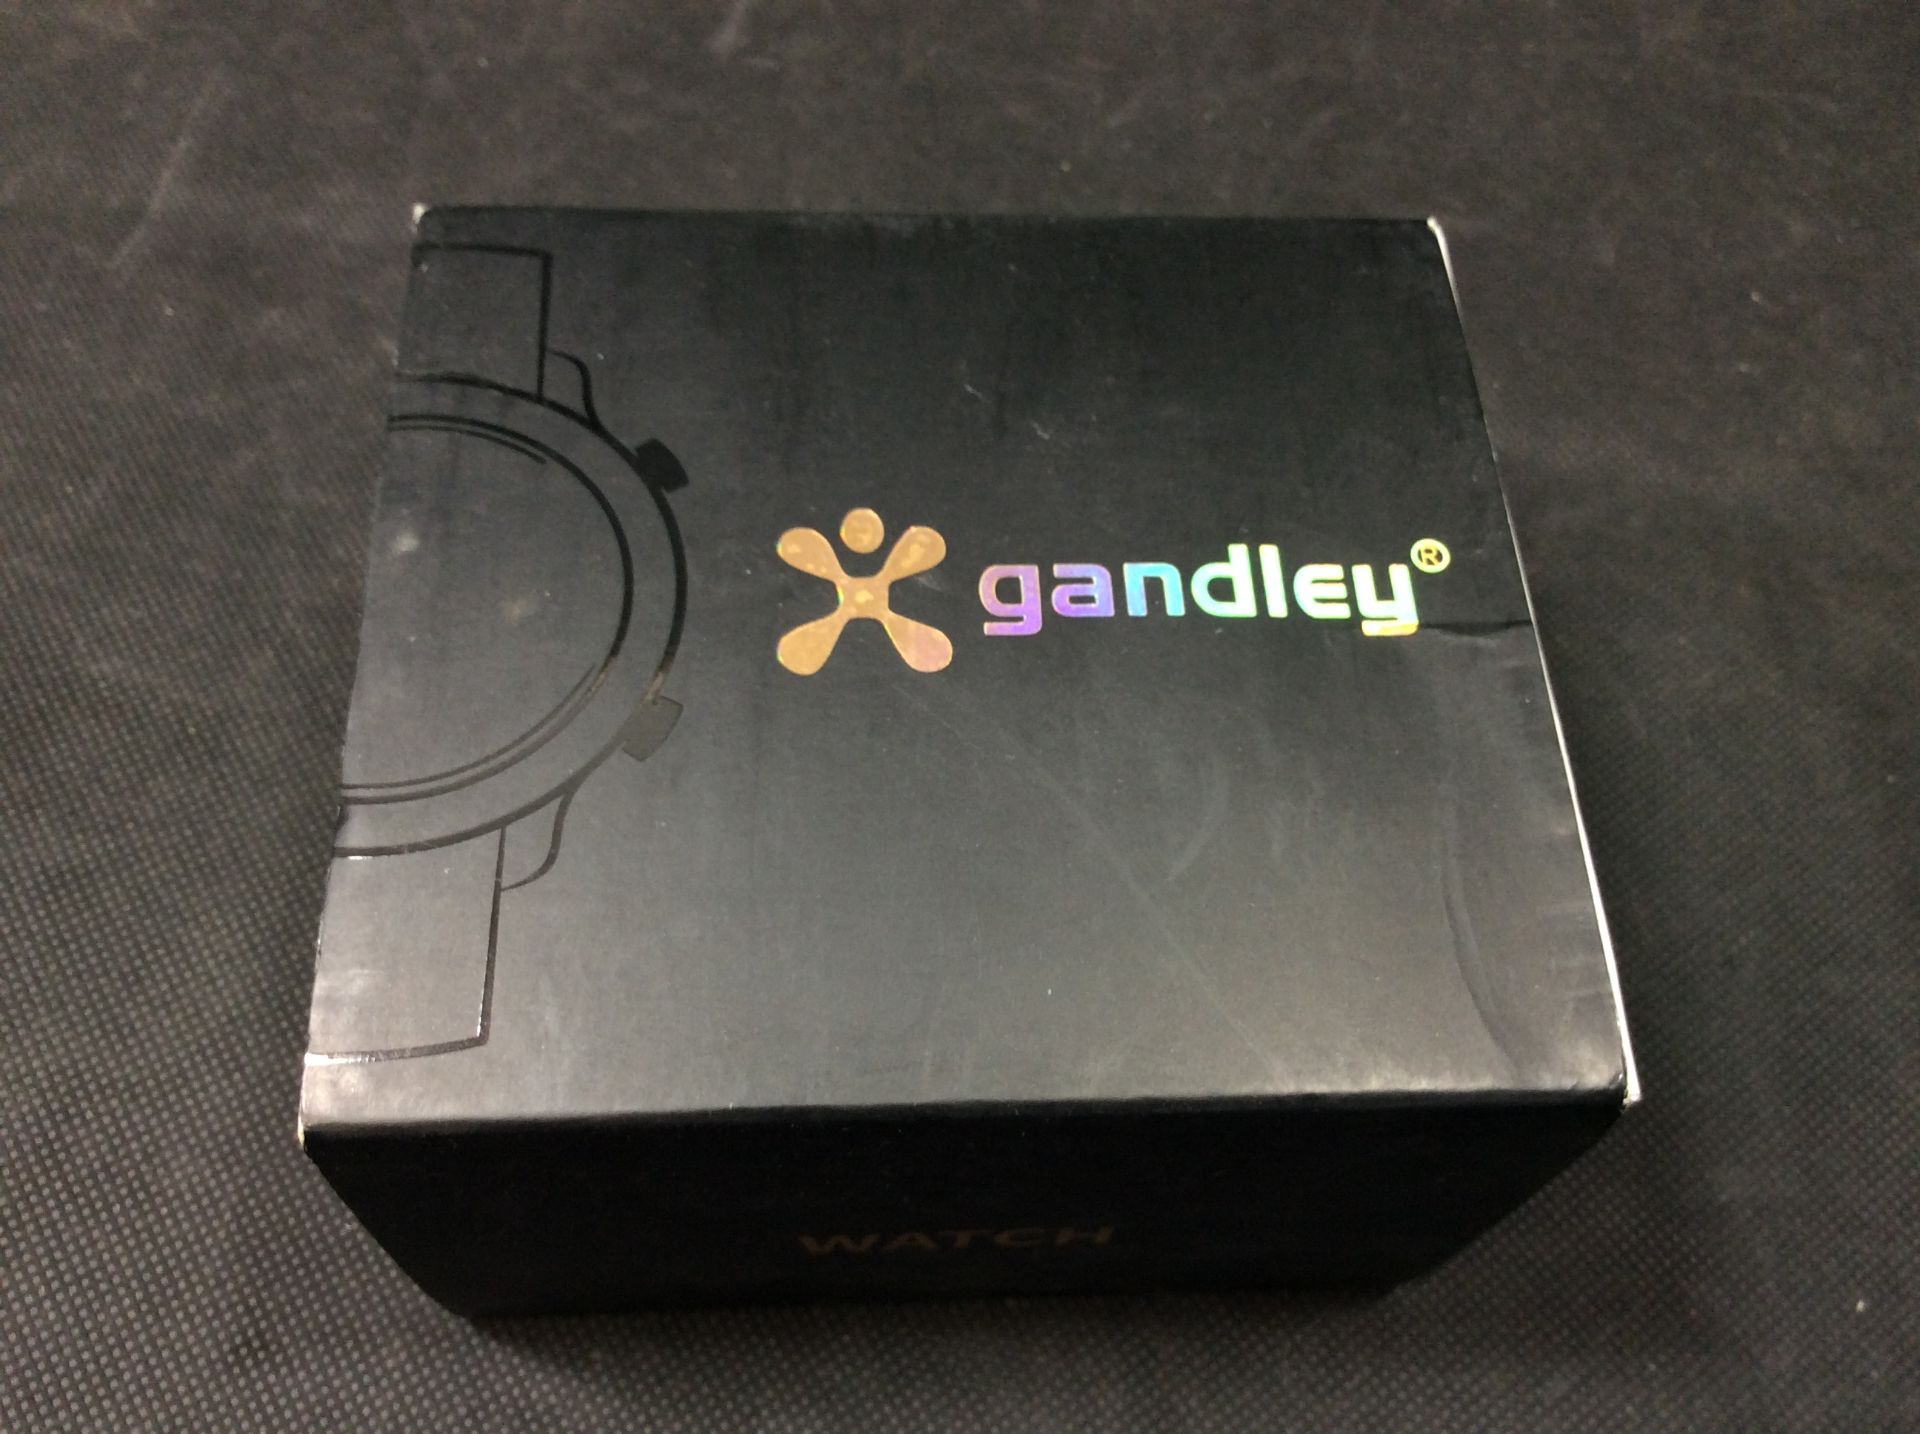 Gandley Smart Watch - Image 2 of 2